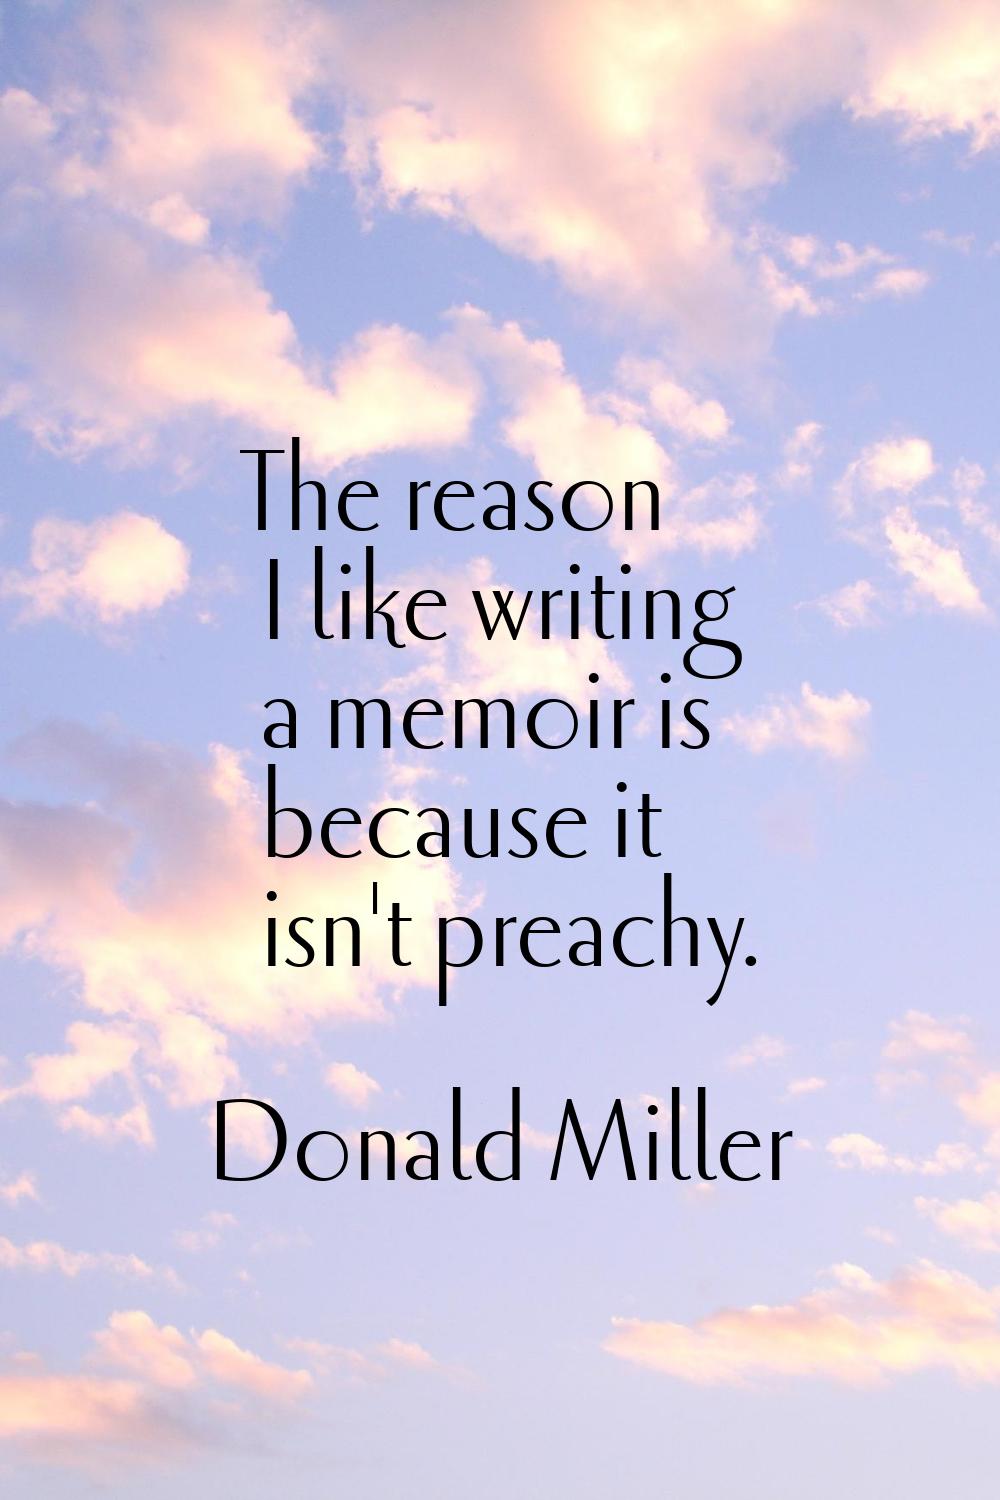 The reason I like writing a memoir is because it isn't preachy.